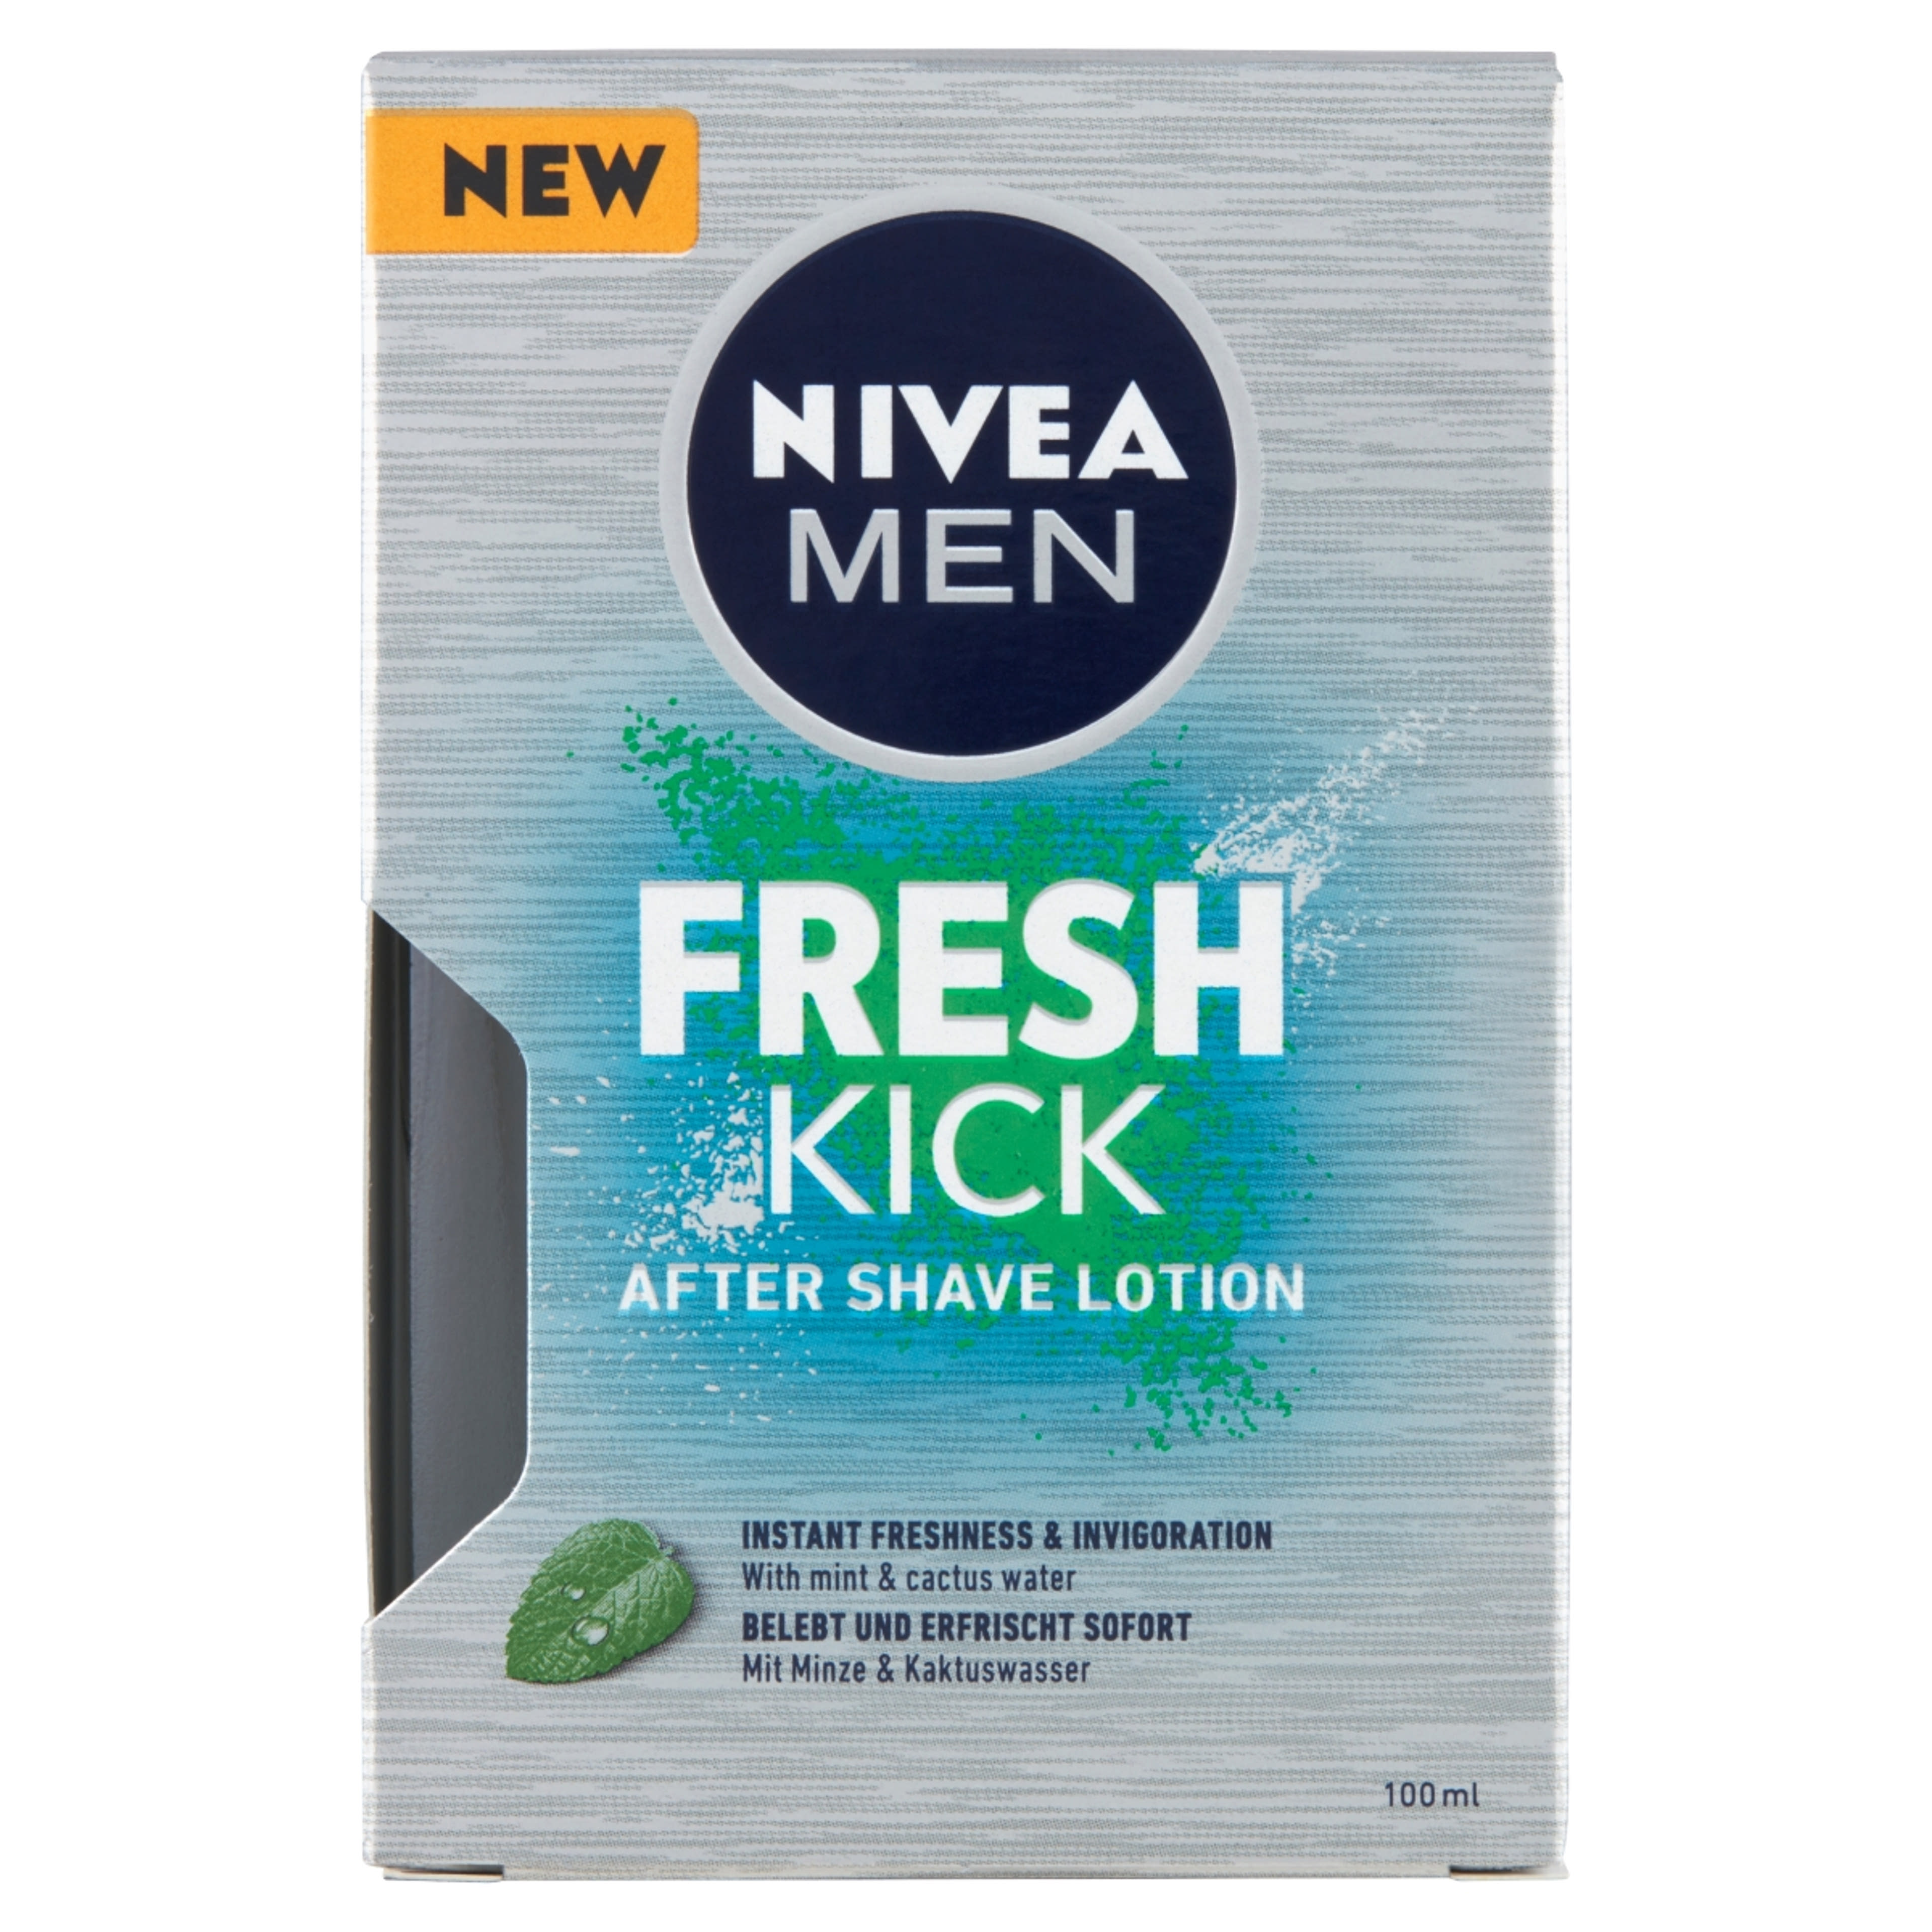 NIVEA MEN after shave fresh kick - 100 ml-1